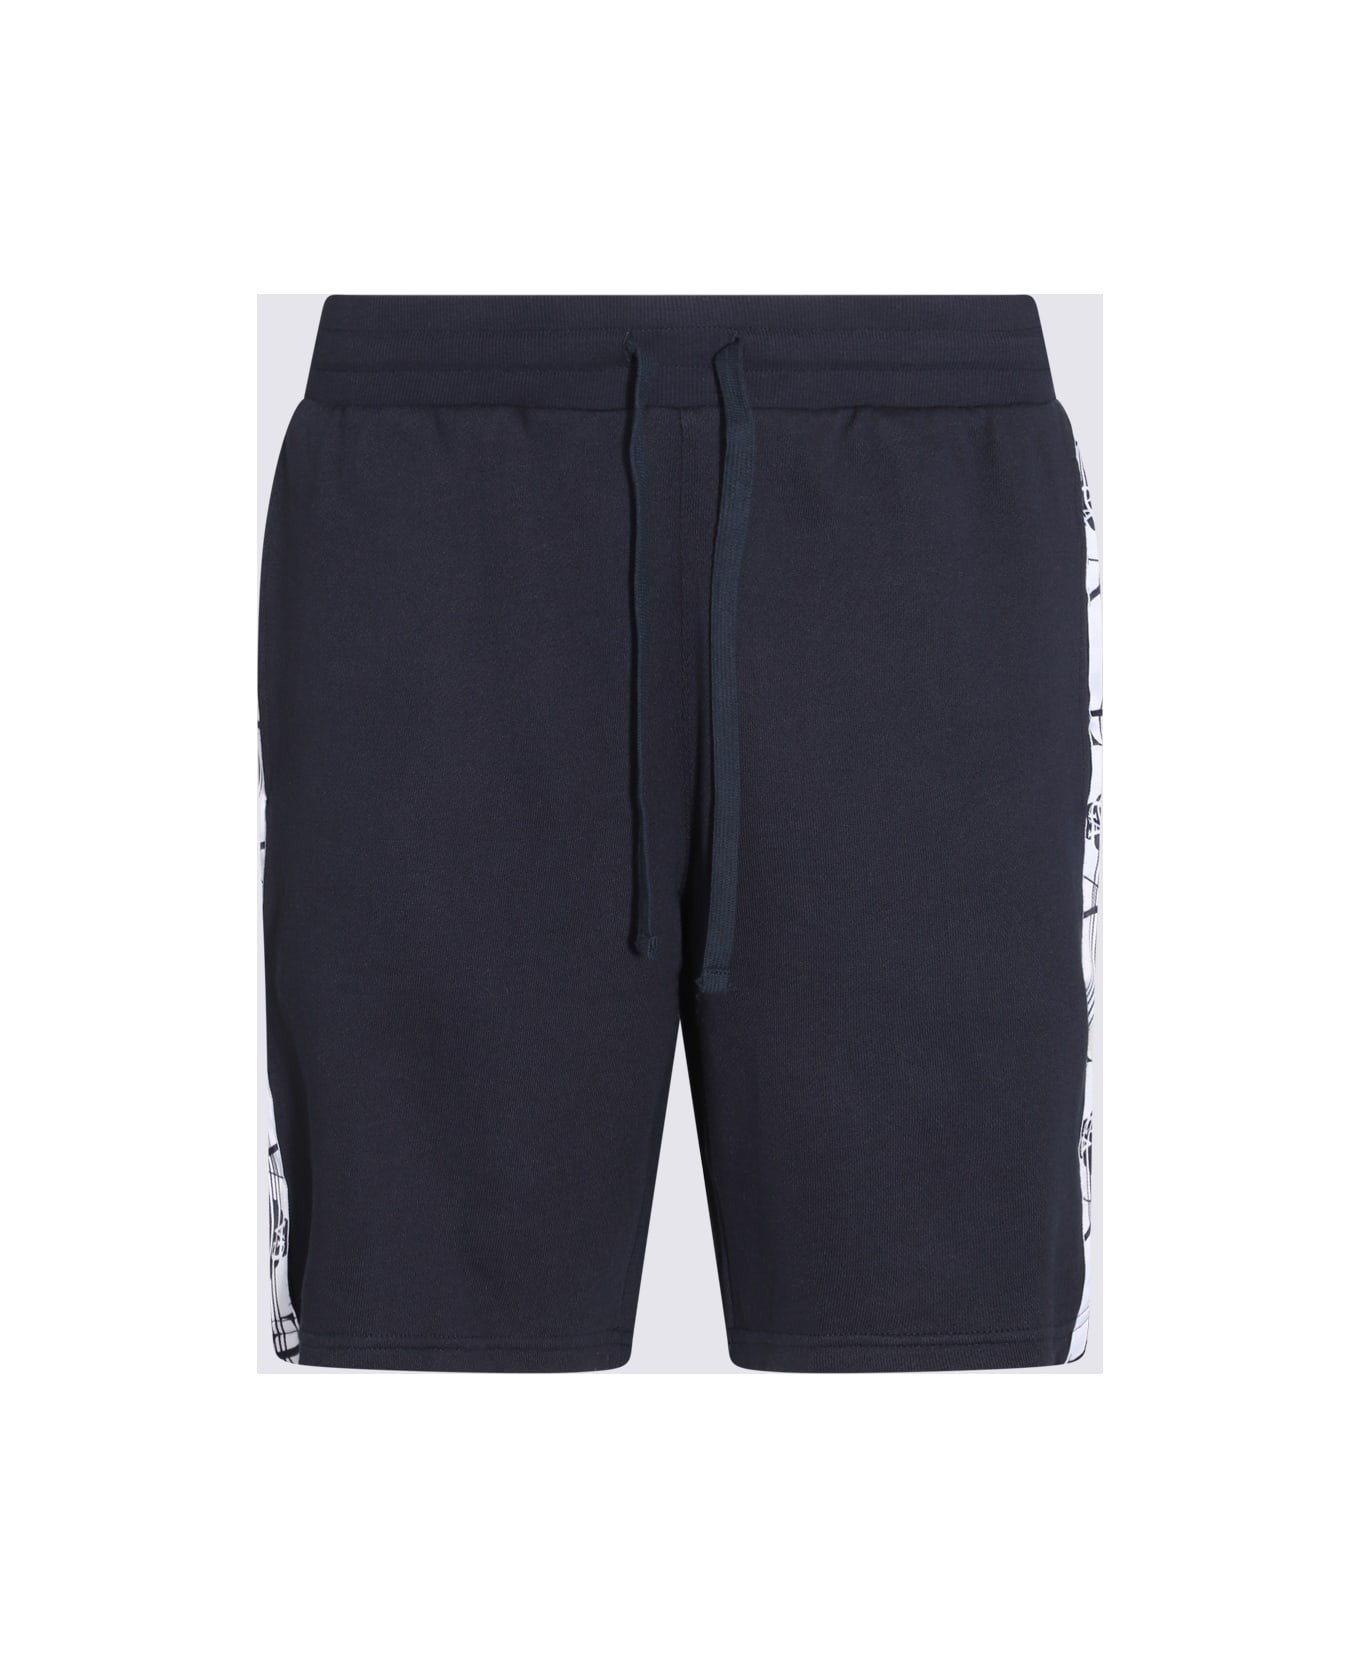 Emporio Armani Underwear Blue Cotton Stretch Shorts